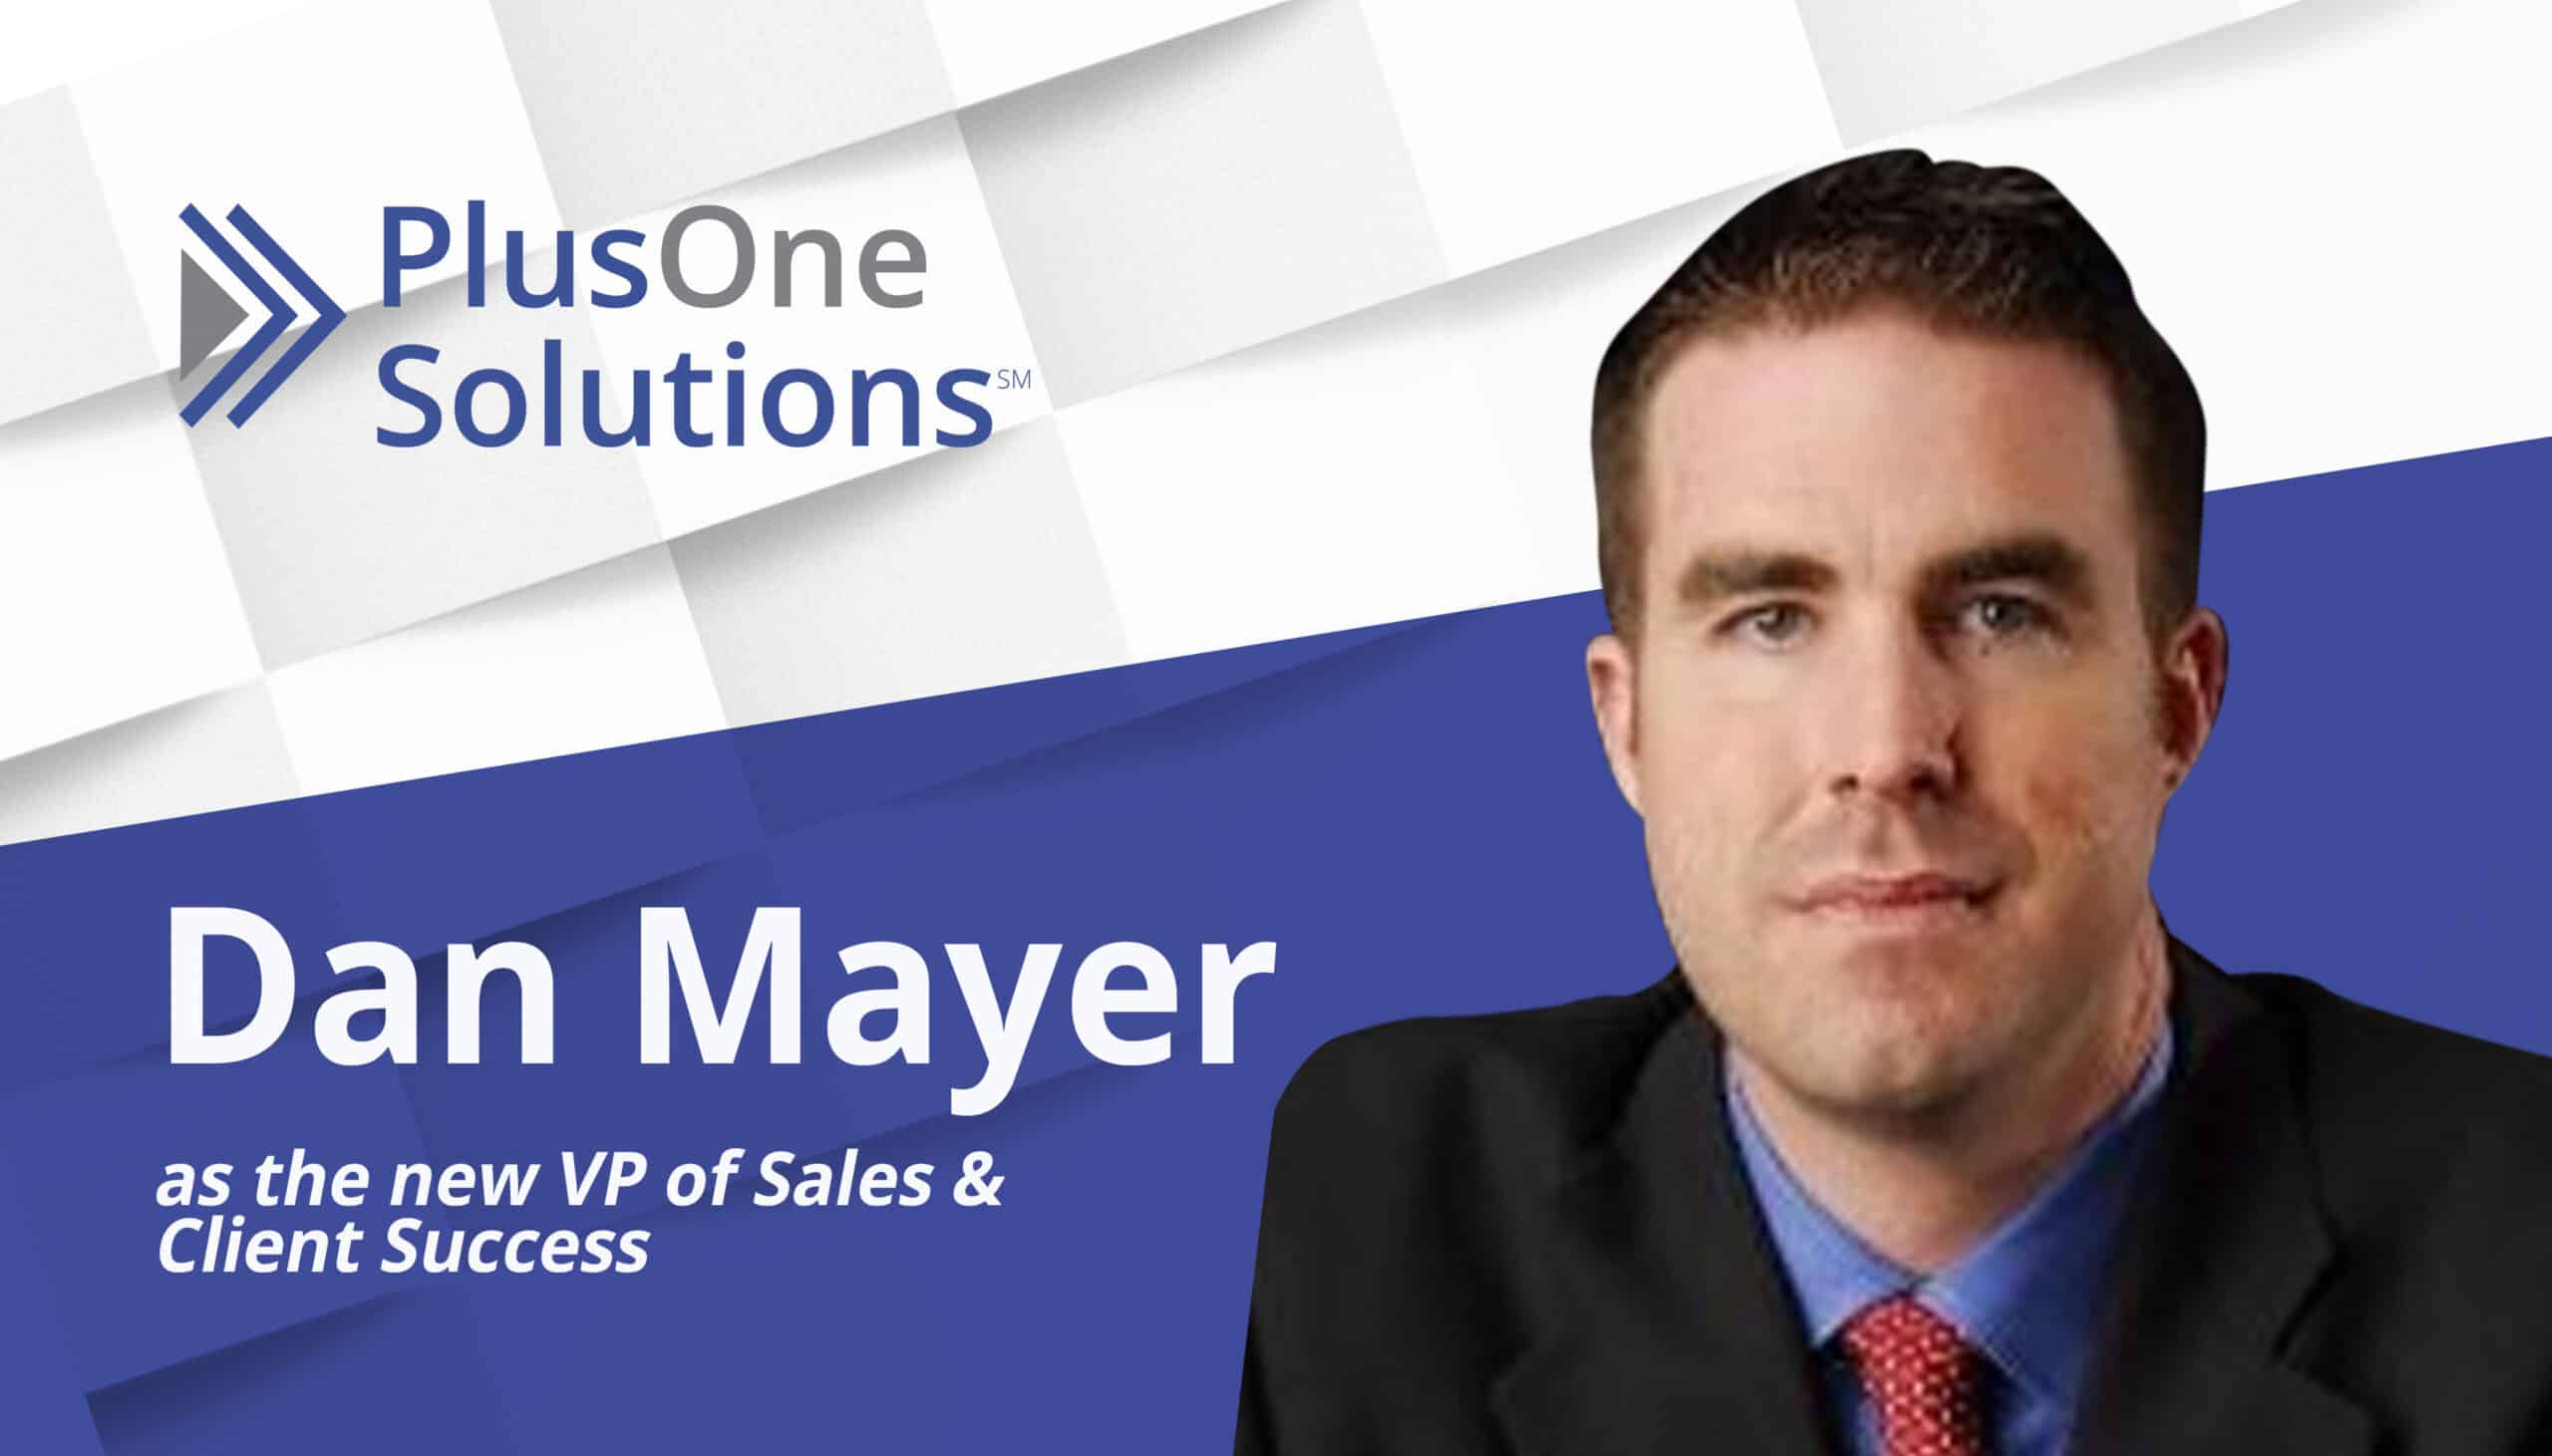 Dan Mayer Joins PlusOne Solutions